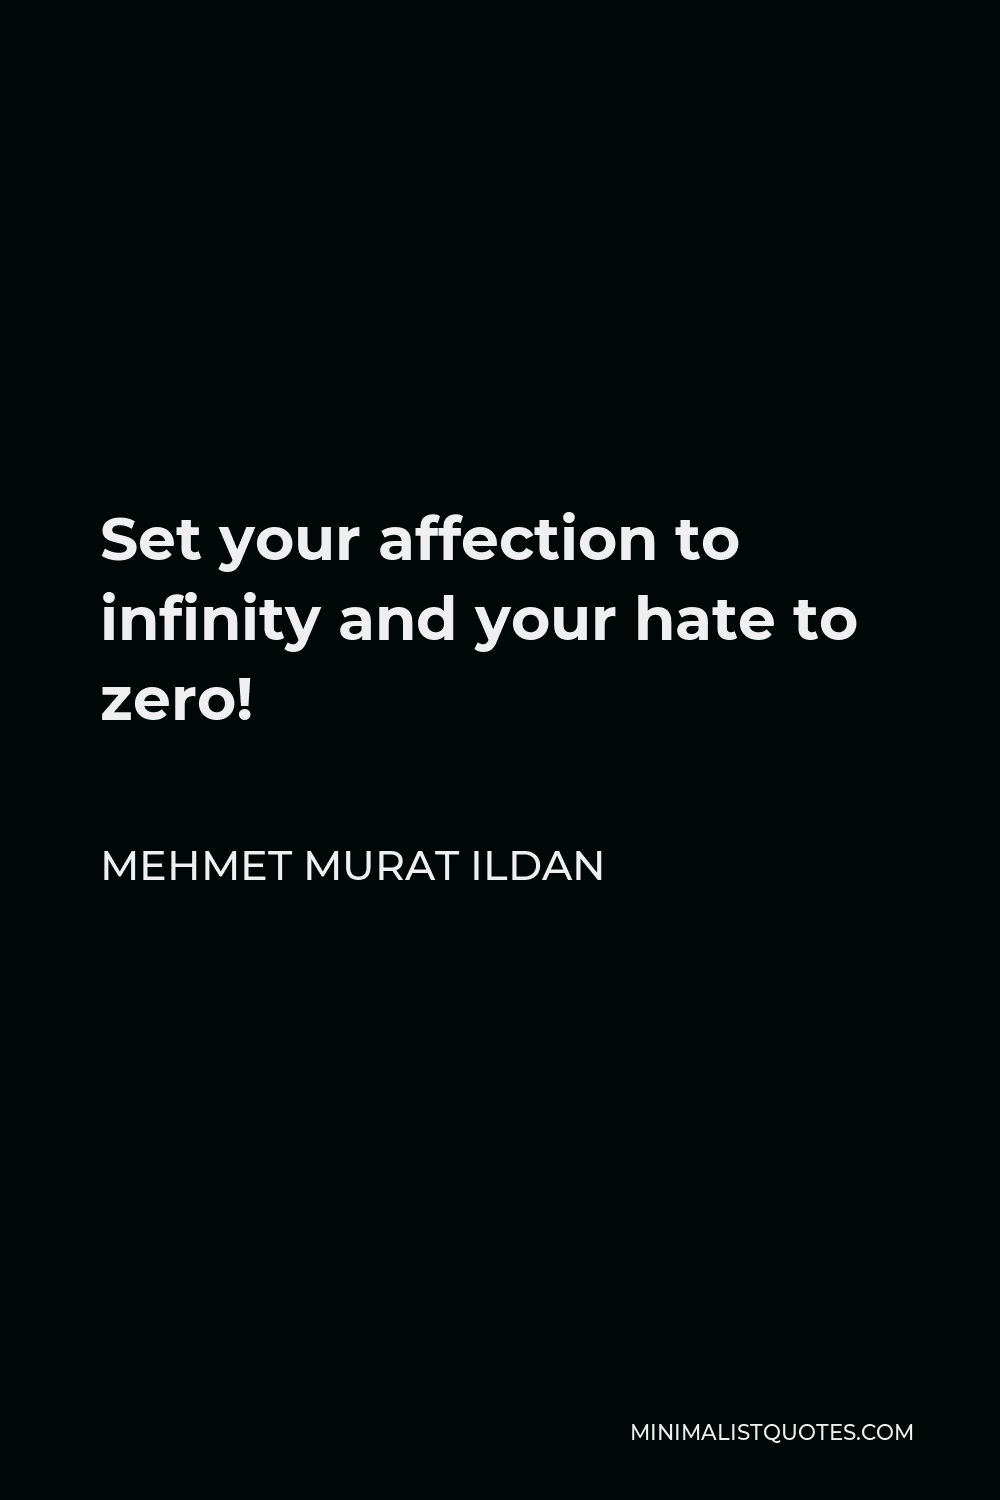 Mehmet Murat Ildan Quote - Set your affection to infinity and your hate to zero!